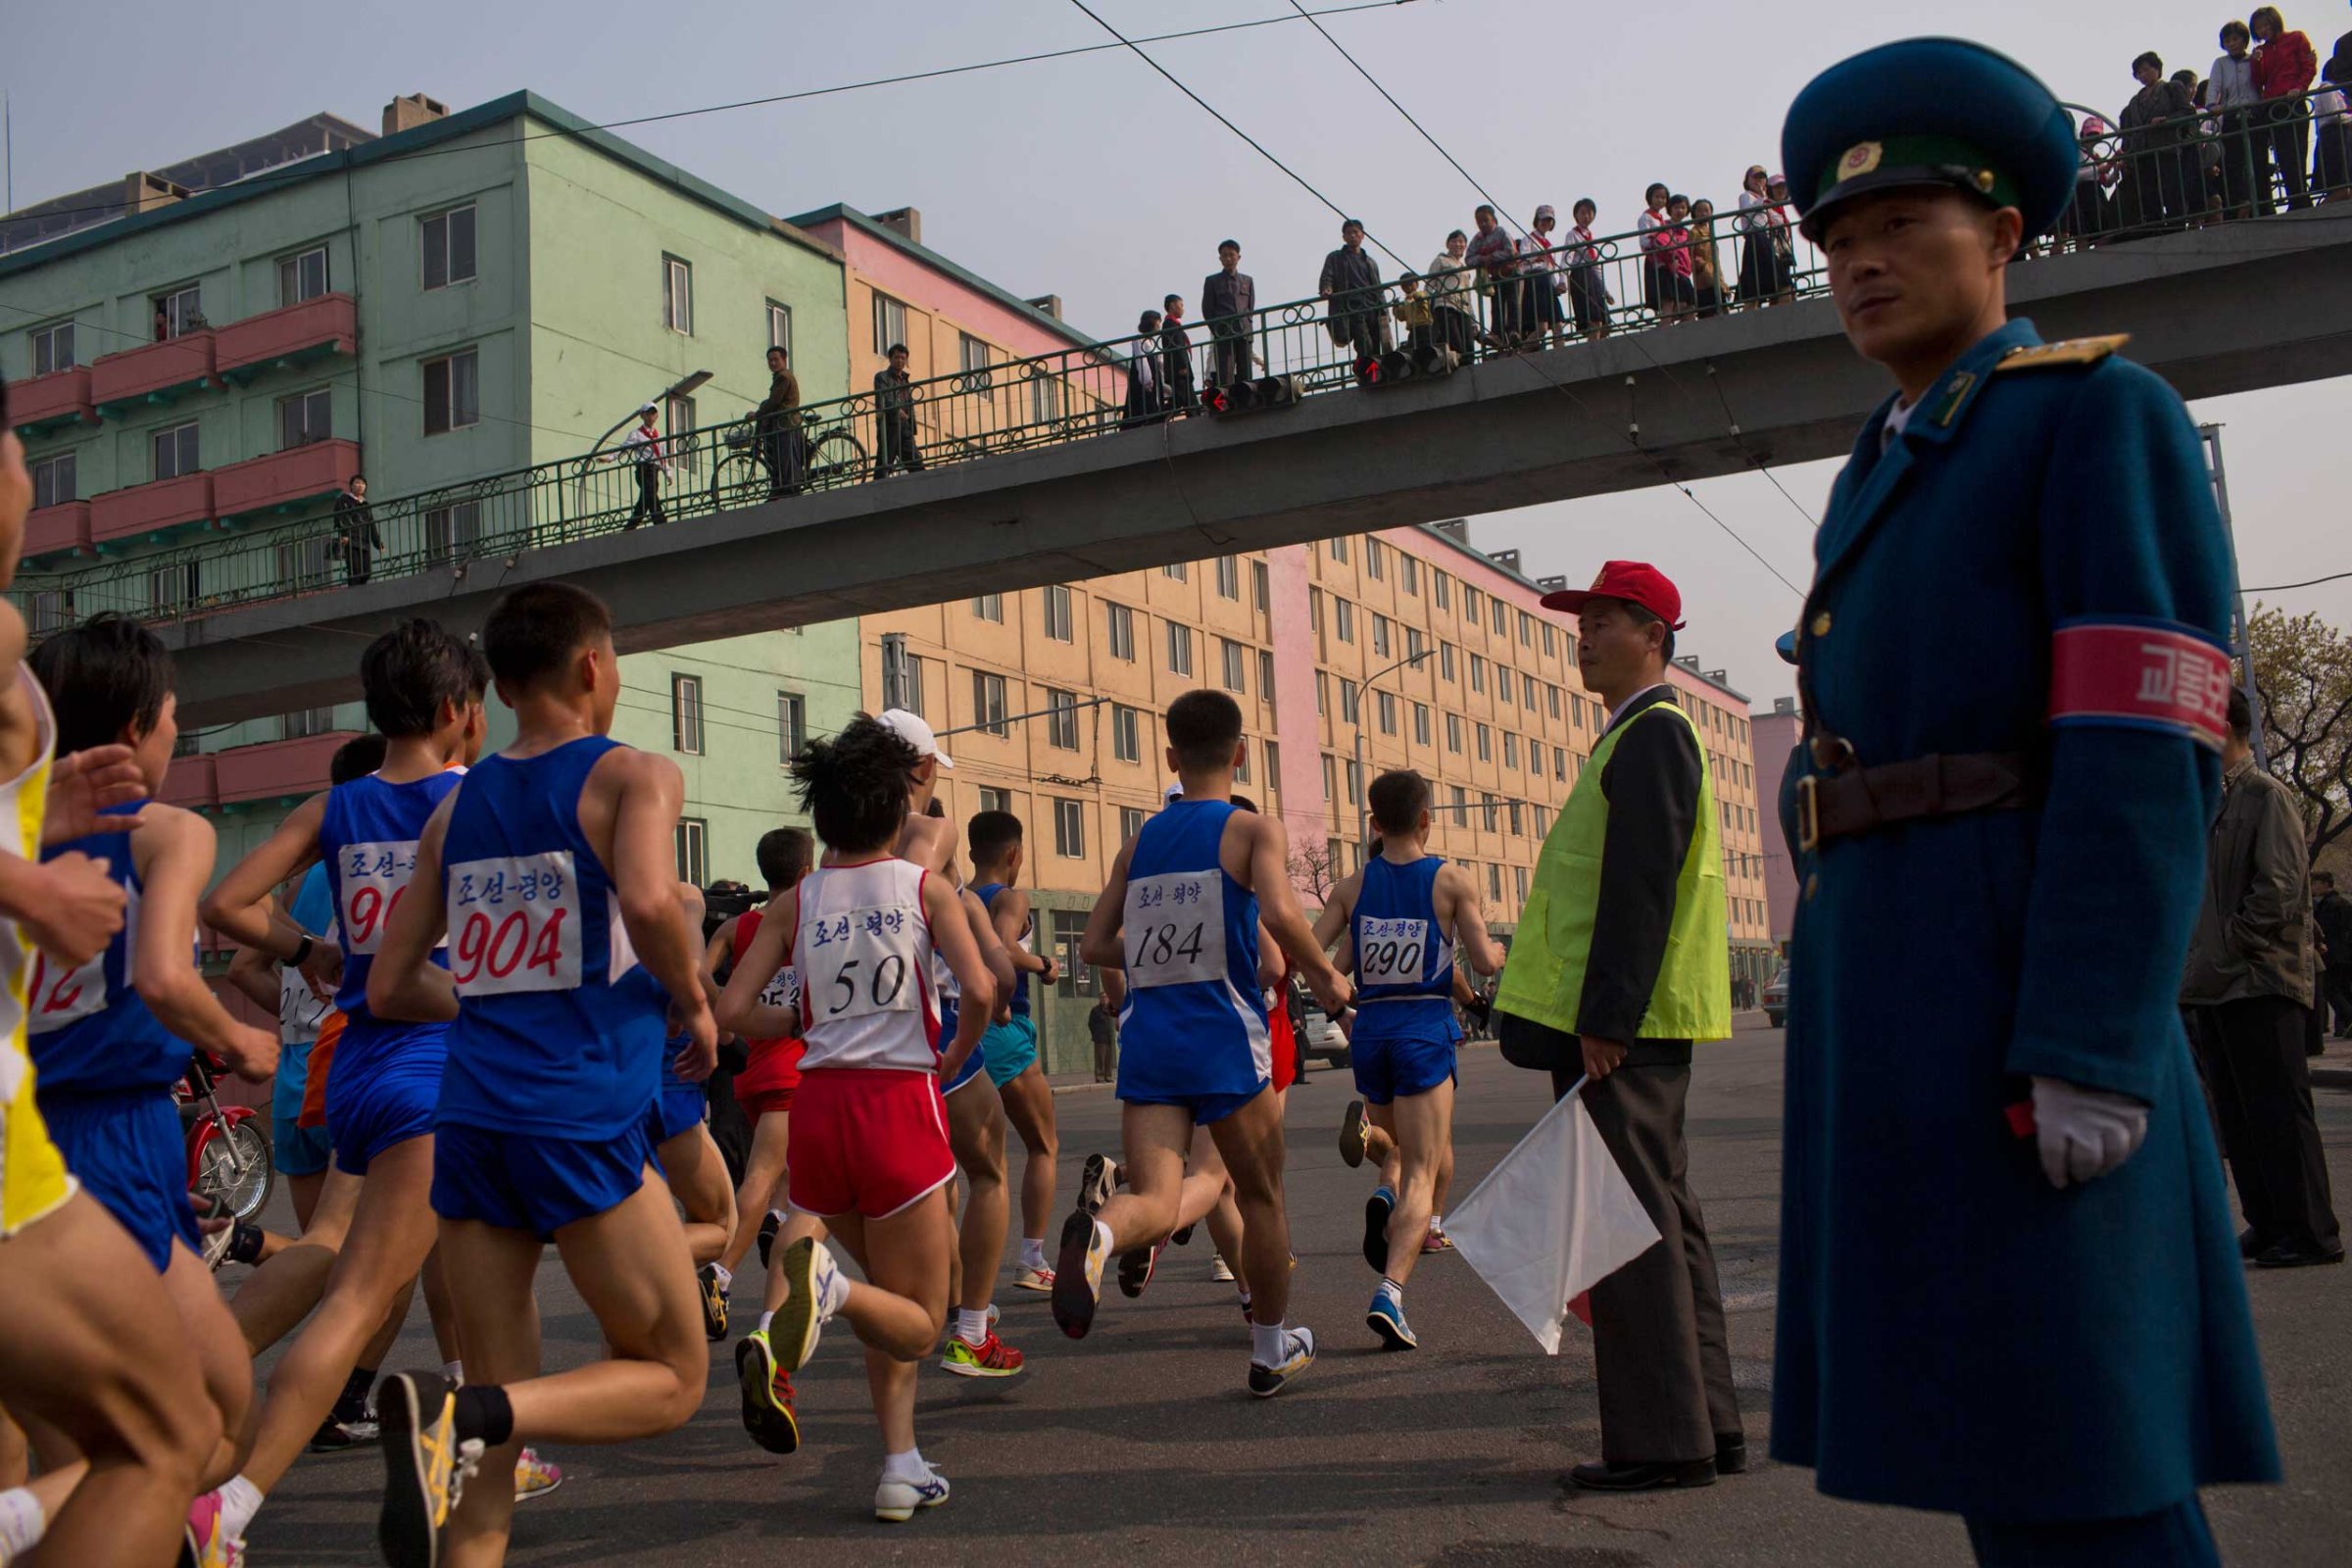 Runners pass under a pedestrian bridge during the running of the Mangyongdae Prize International Marathon in Pyongyang, North Korea on April 13, 2014.